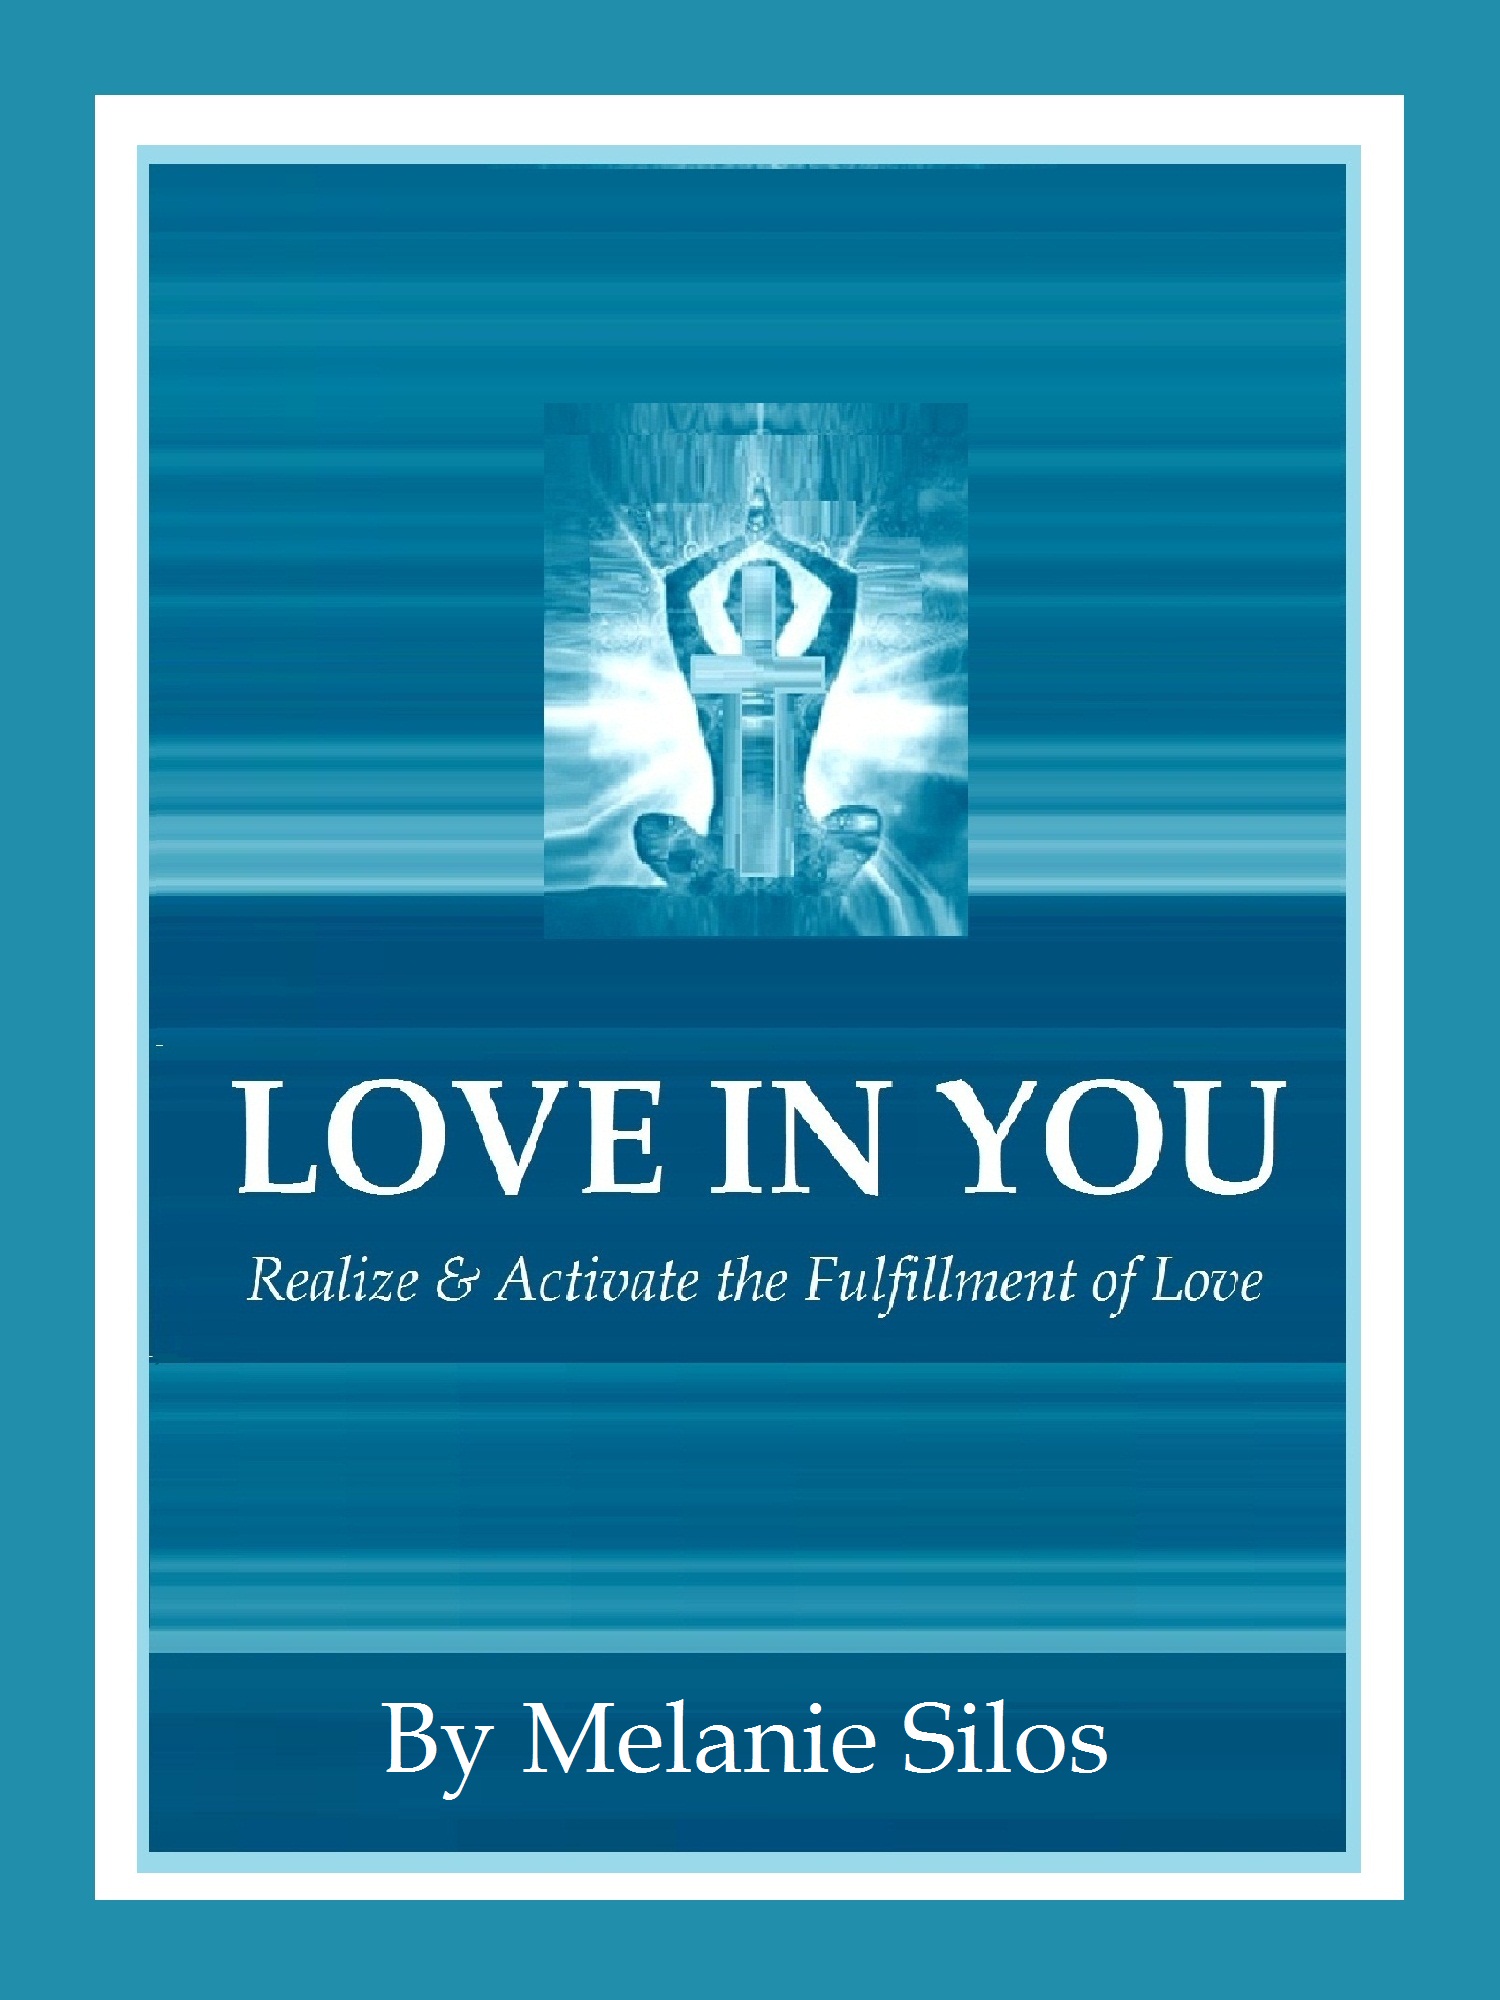 Love in You - ebook by Melanie Silos